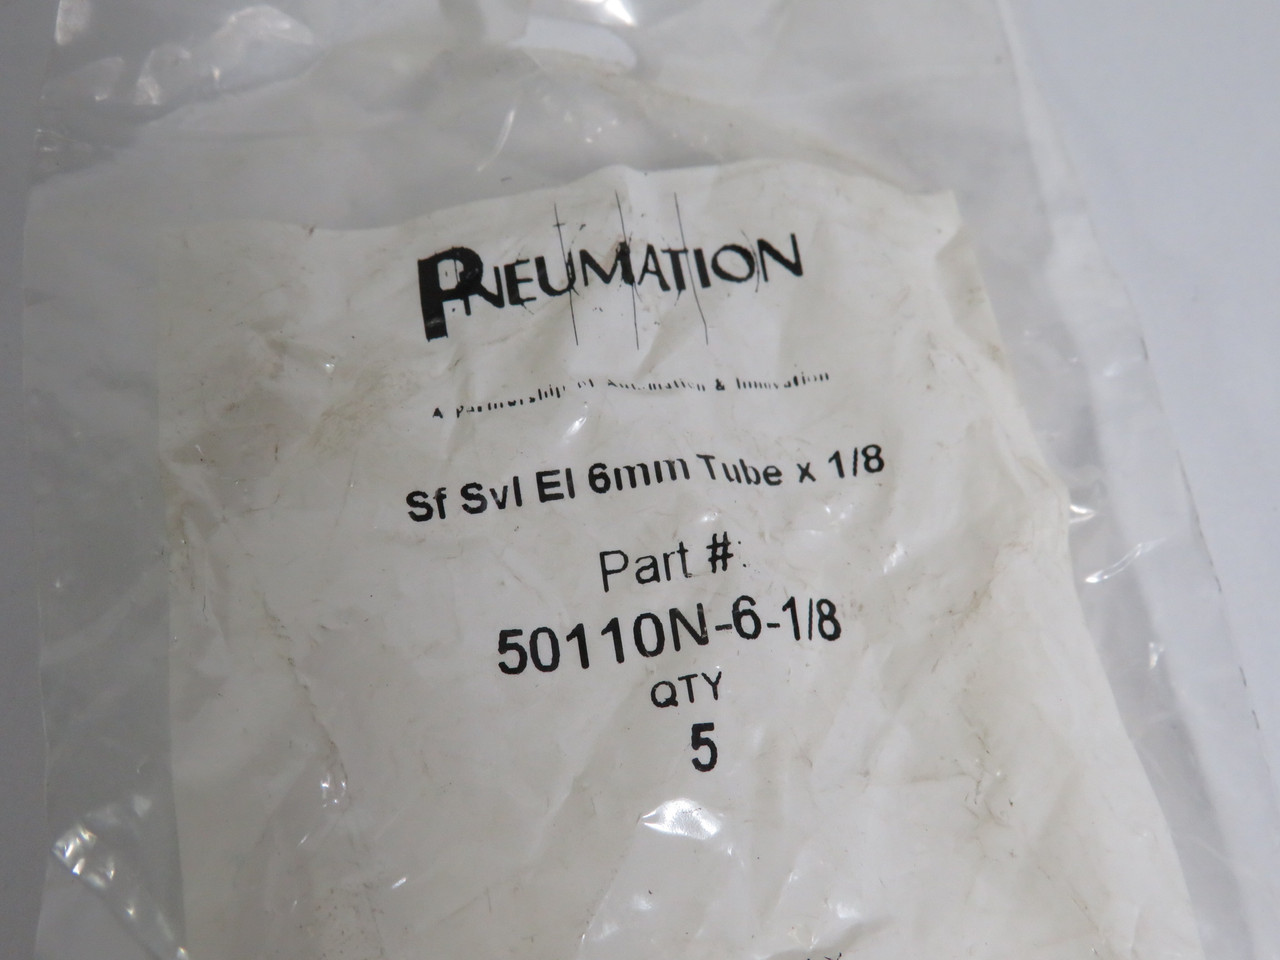 Pneumation 50110N-6-1/8 Swivel Male Elbow 6mm Tube 1/8" Lot of 3 *Open Bag* NWB